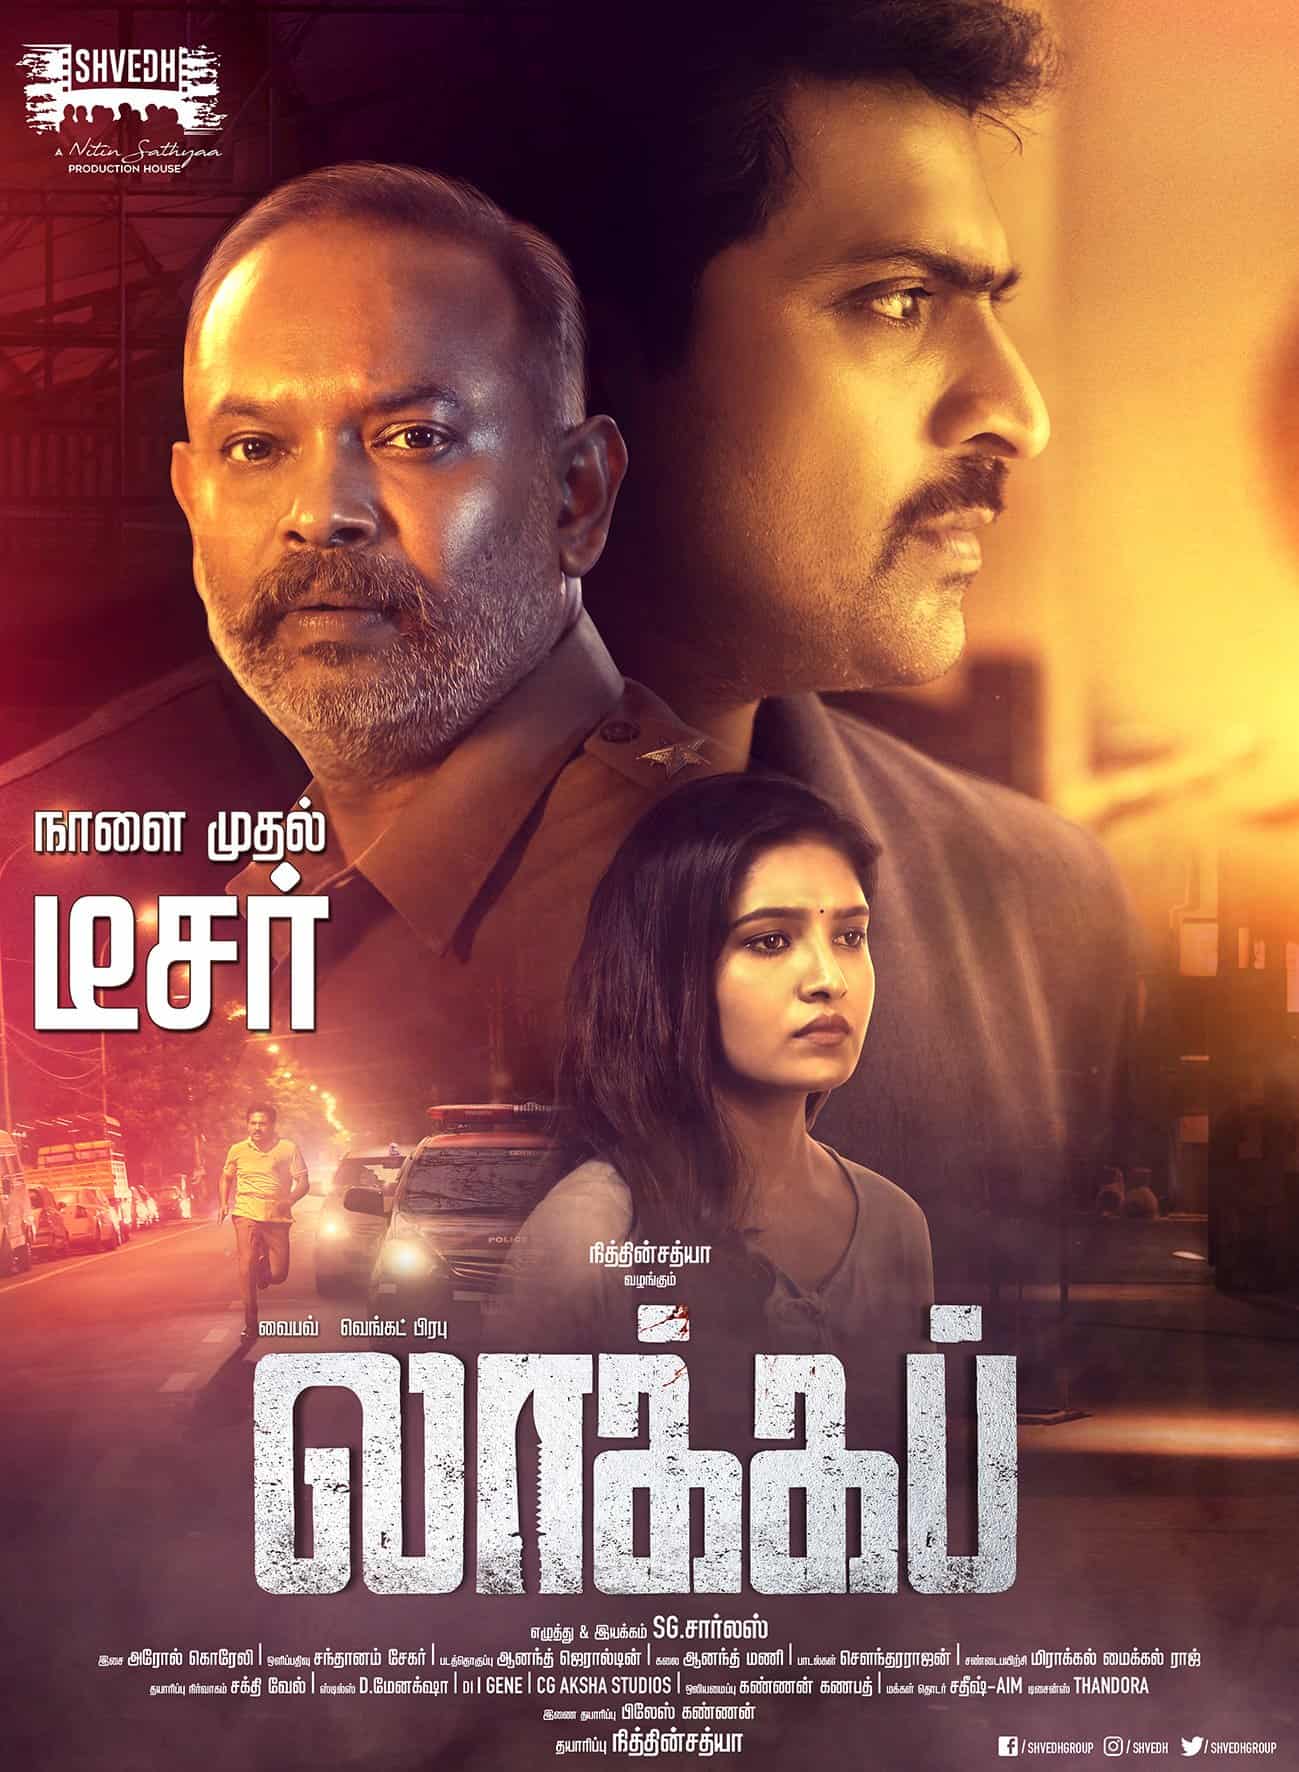 Lockup 2020 Tamil Drama Movie Online